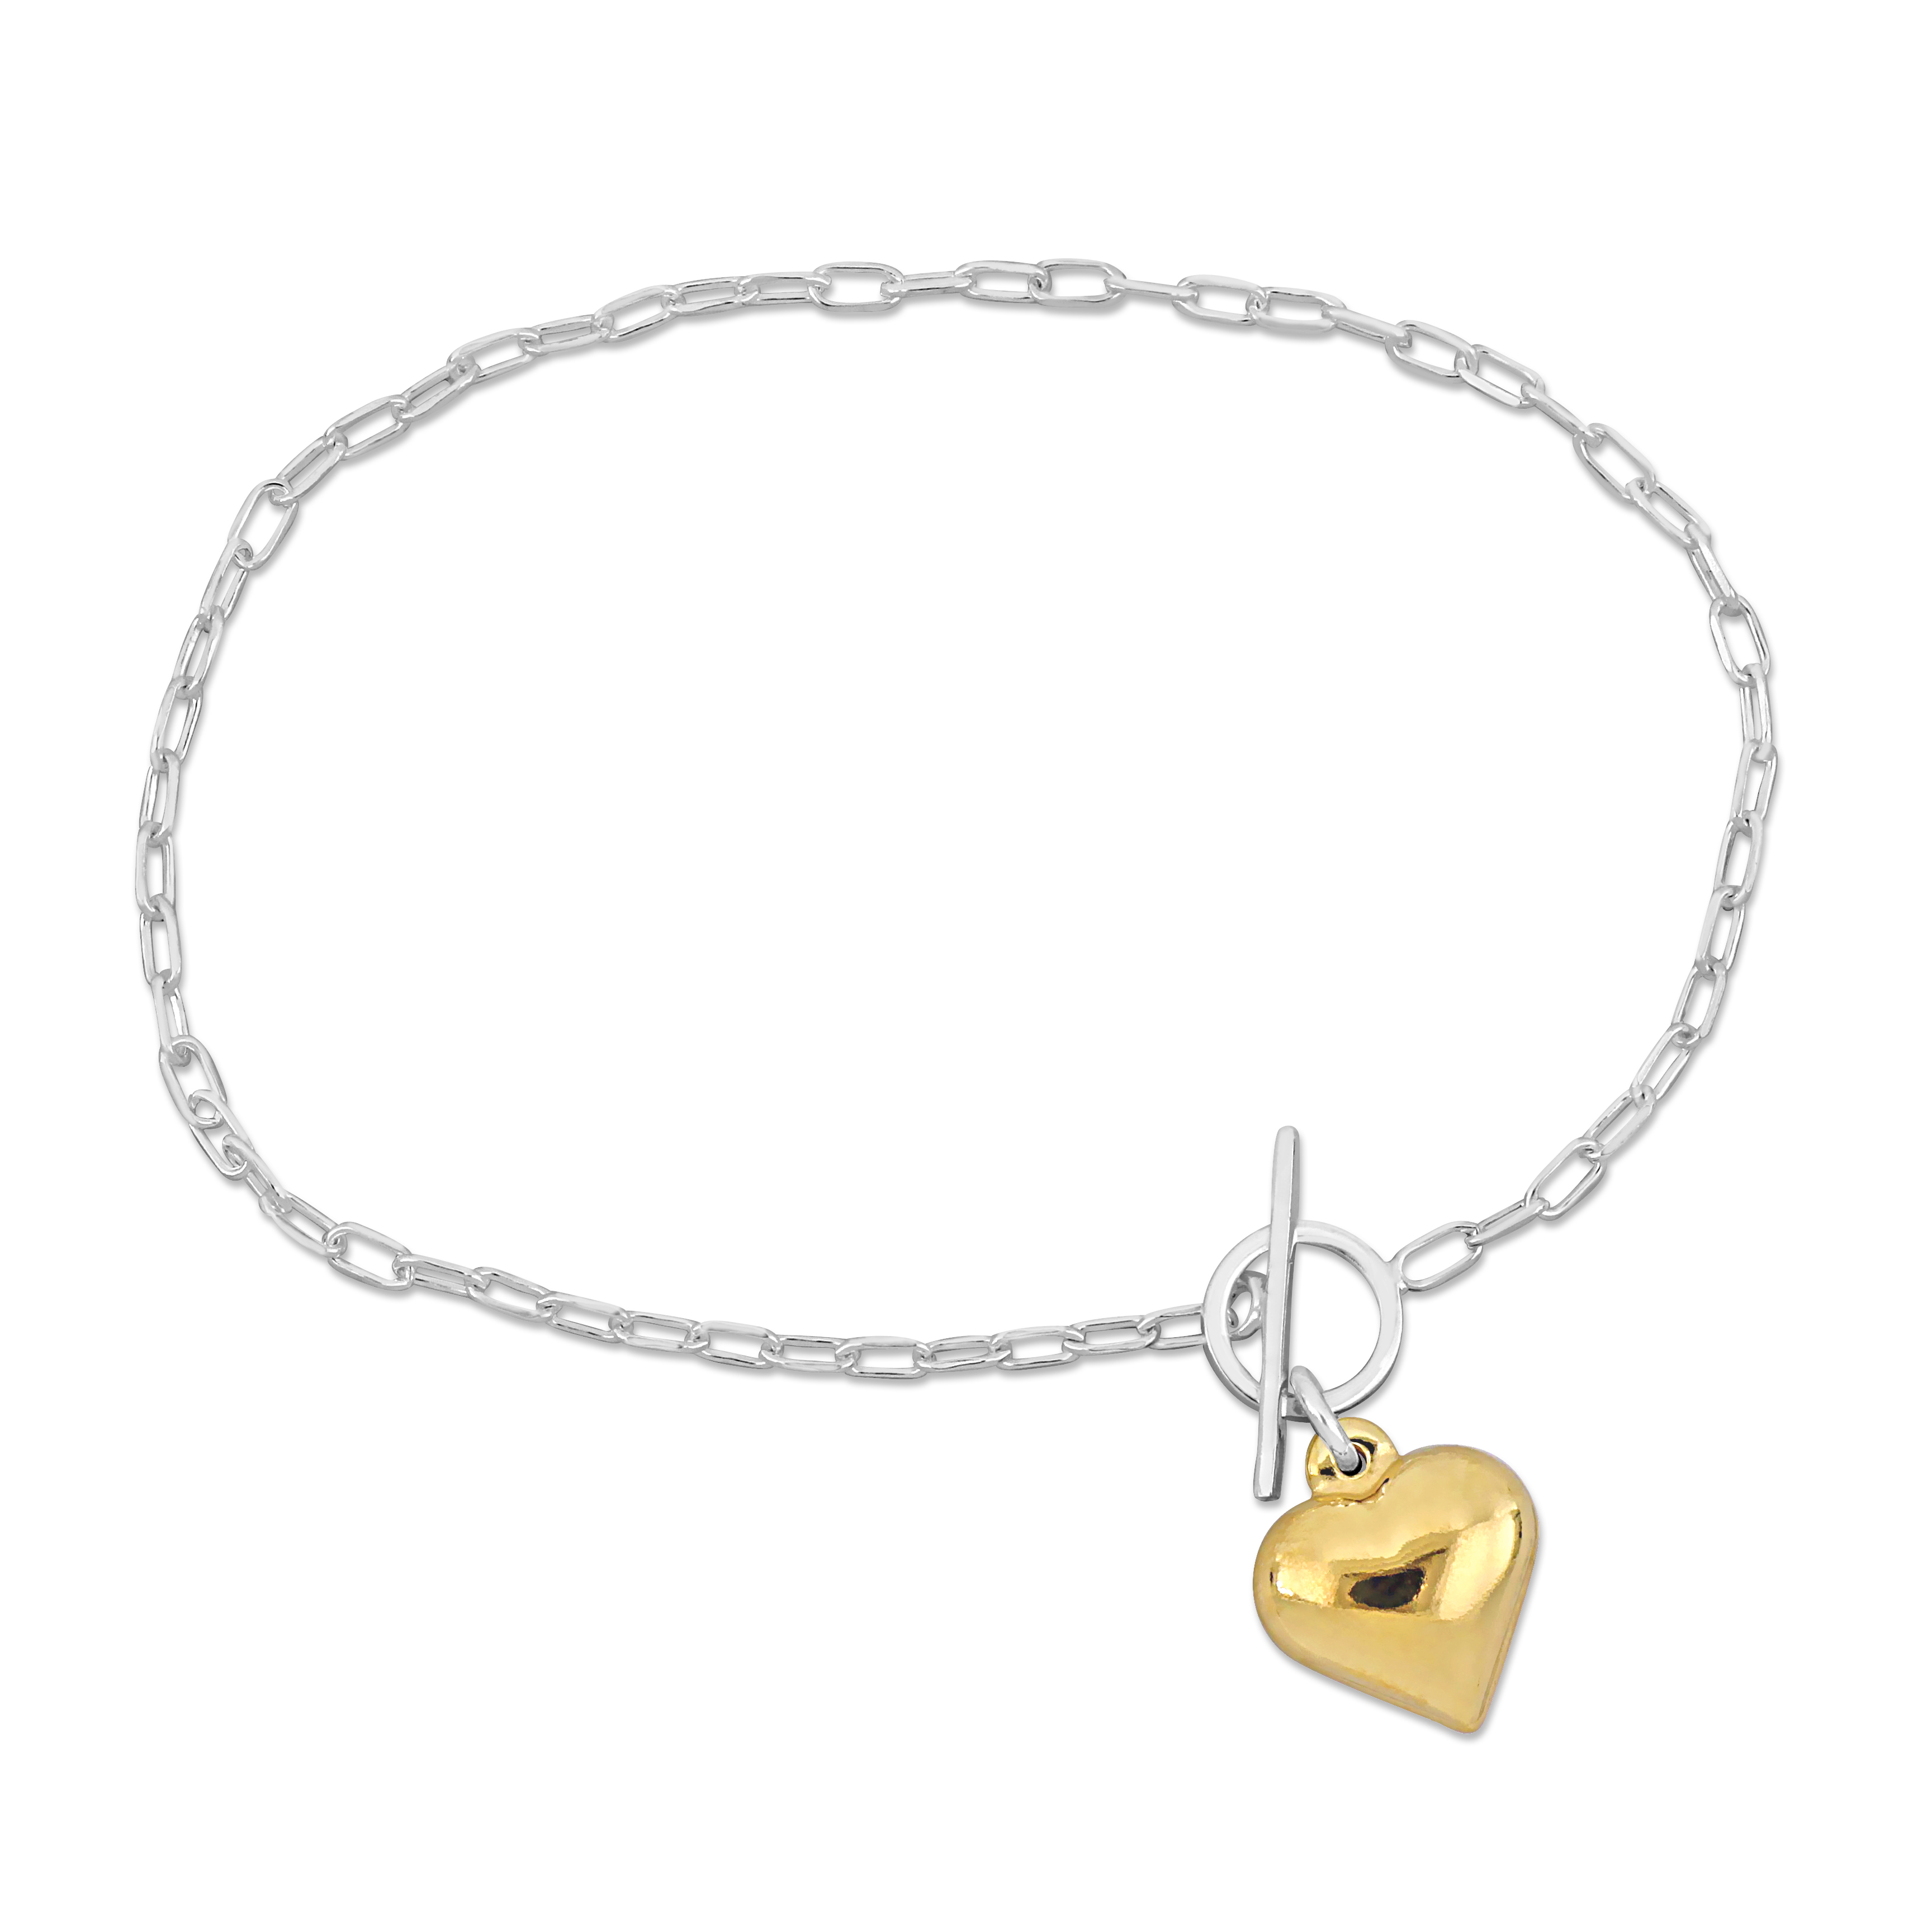 Yellow Heart Charm Bracelet in Two-Tone Sterling Silver - 7.5 in.